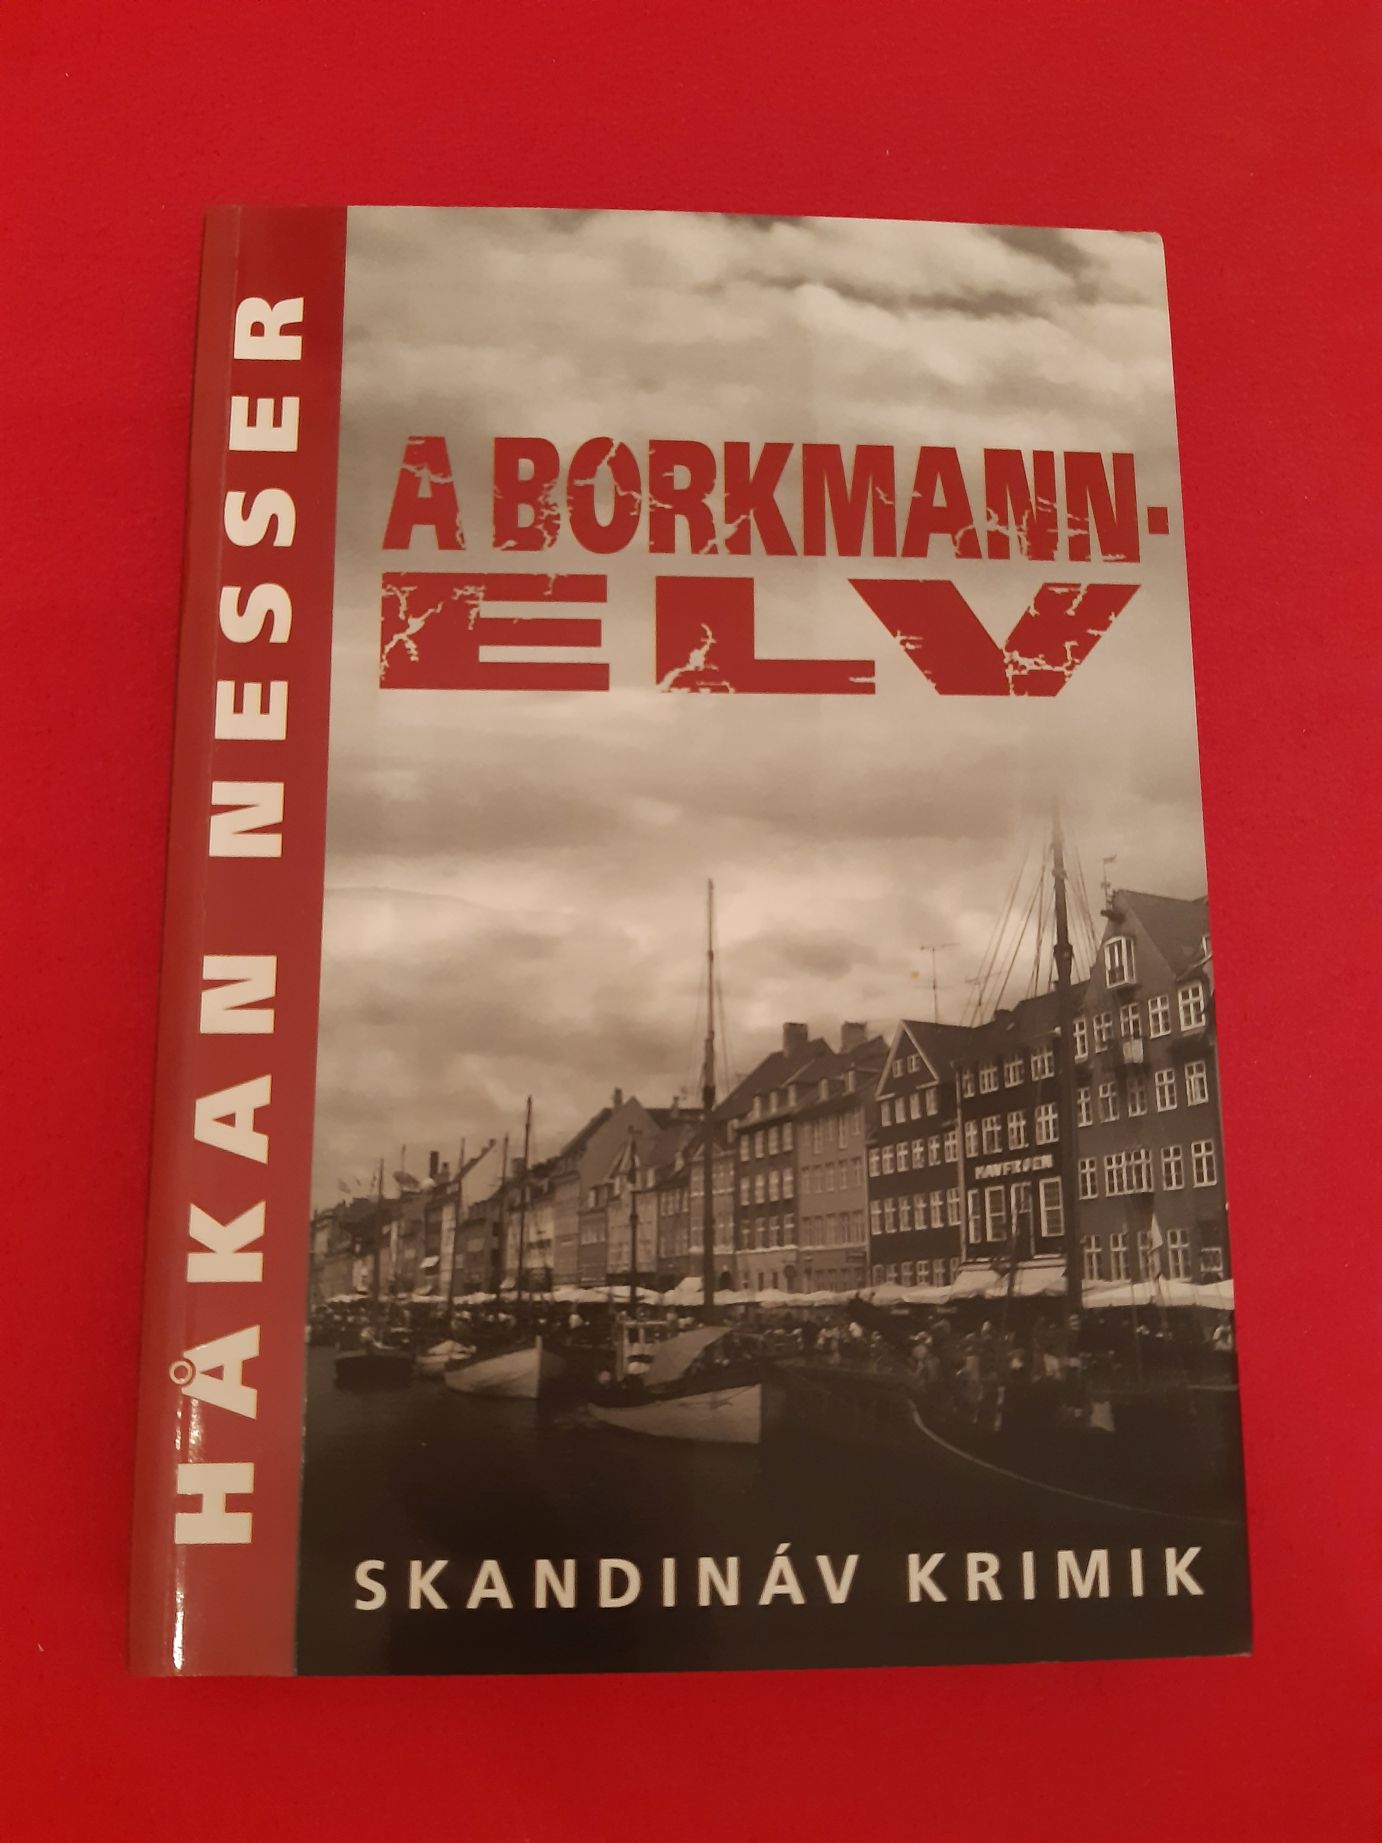 A Borkmann elv